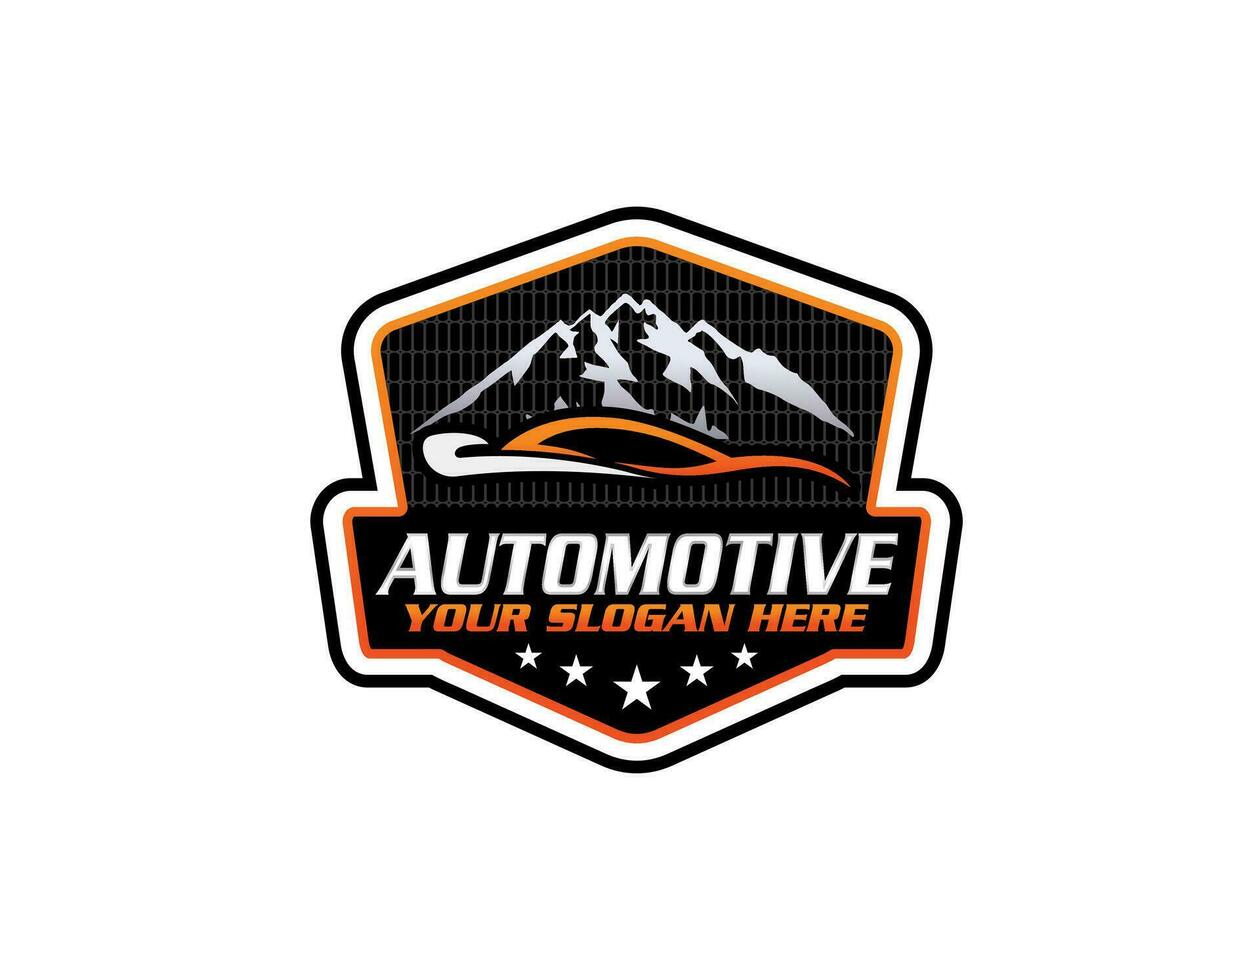 Auto car dealer logo emblem. Sports car silhouette icon. Motor